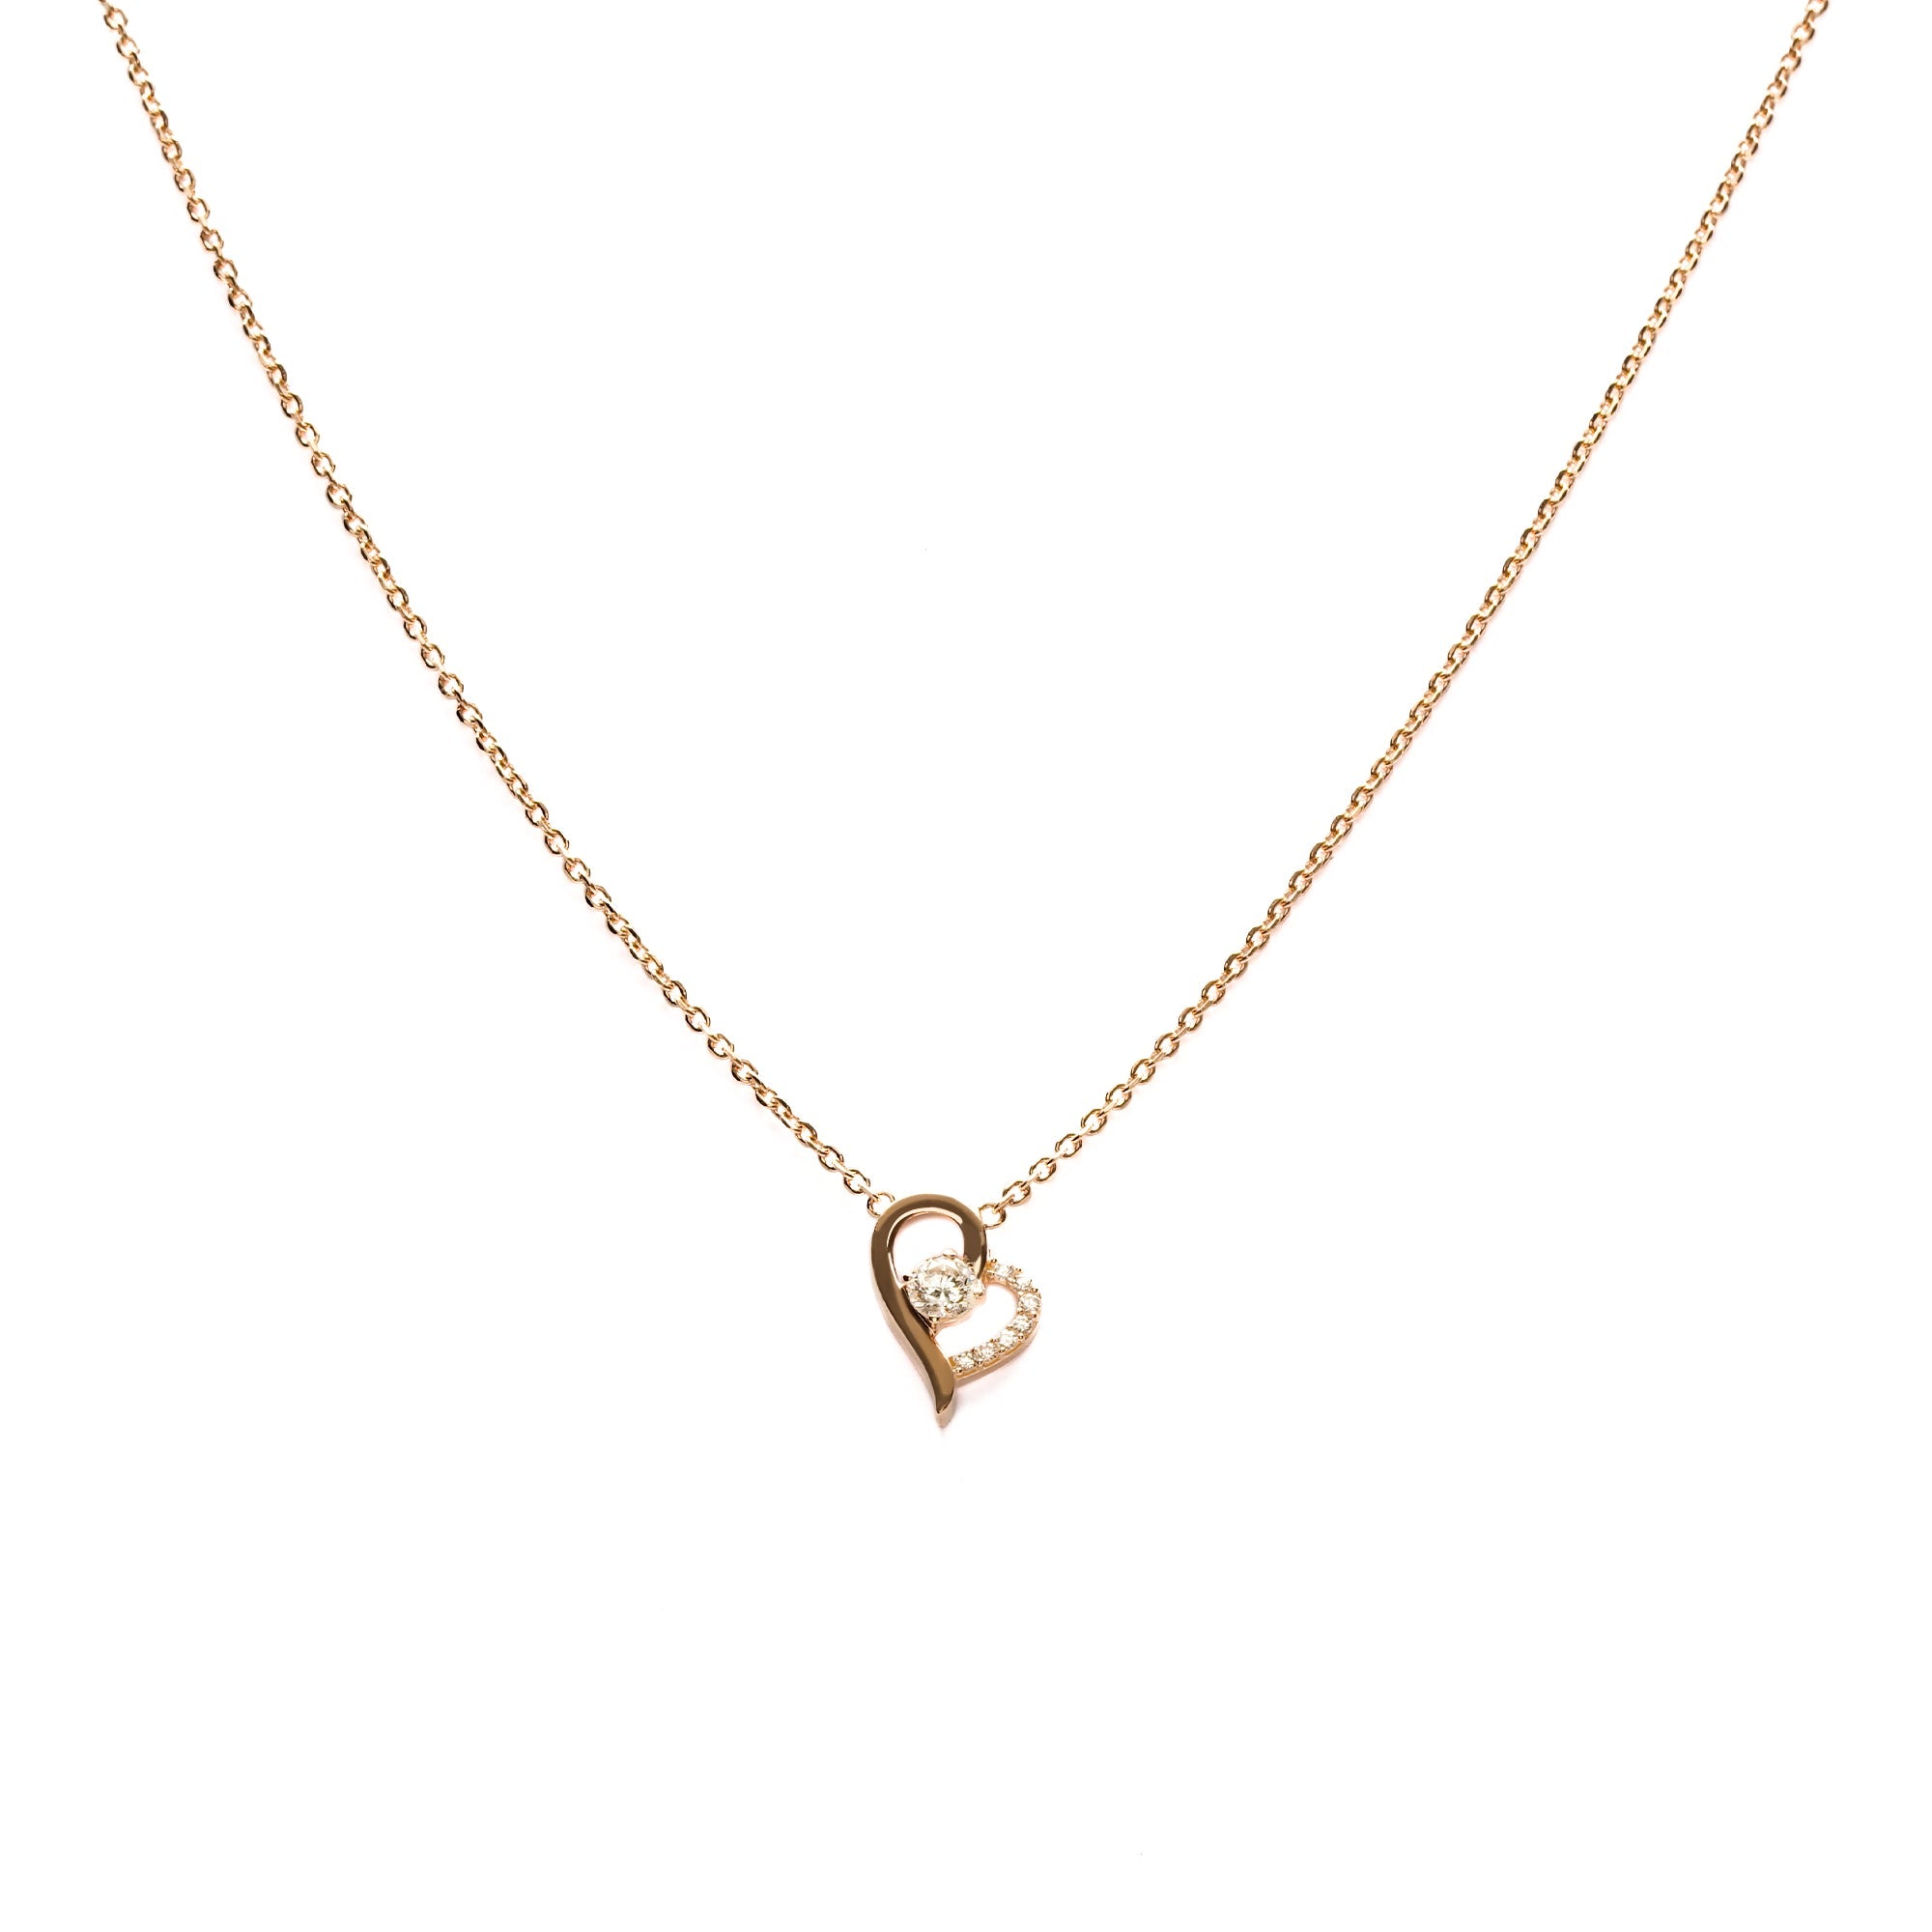 Lovisa Gold Necklace - Radiance - Juene Jewelry